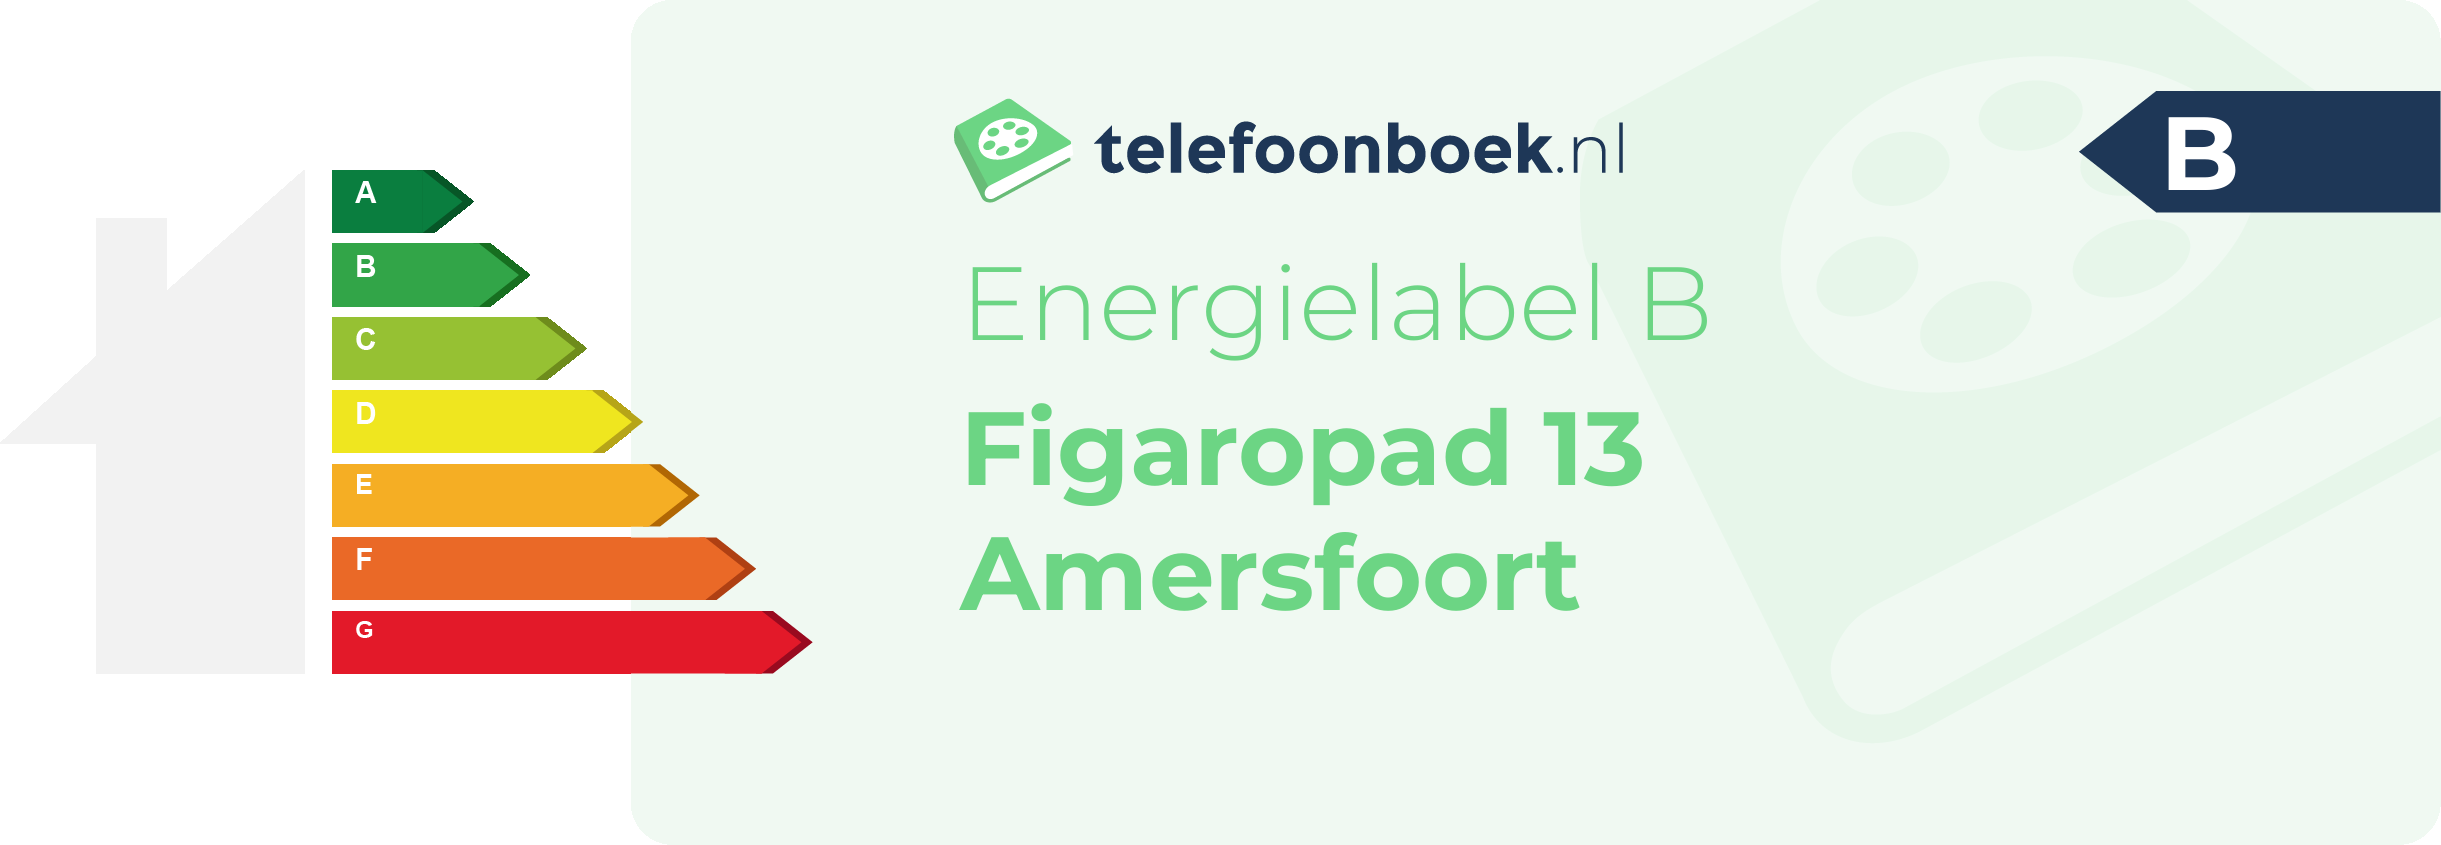 Energielabel Figaropad 13 Amersfoort